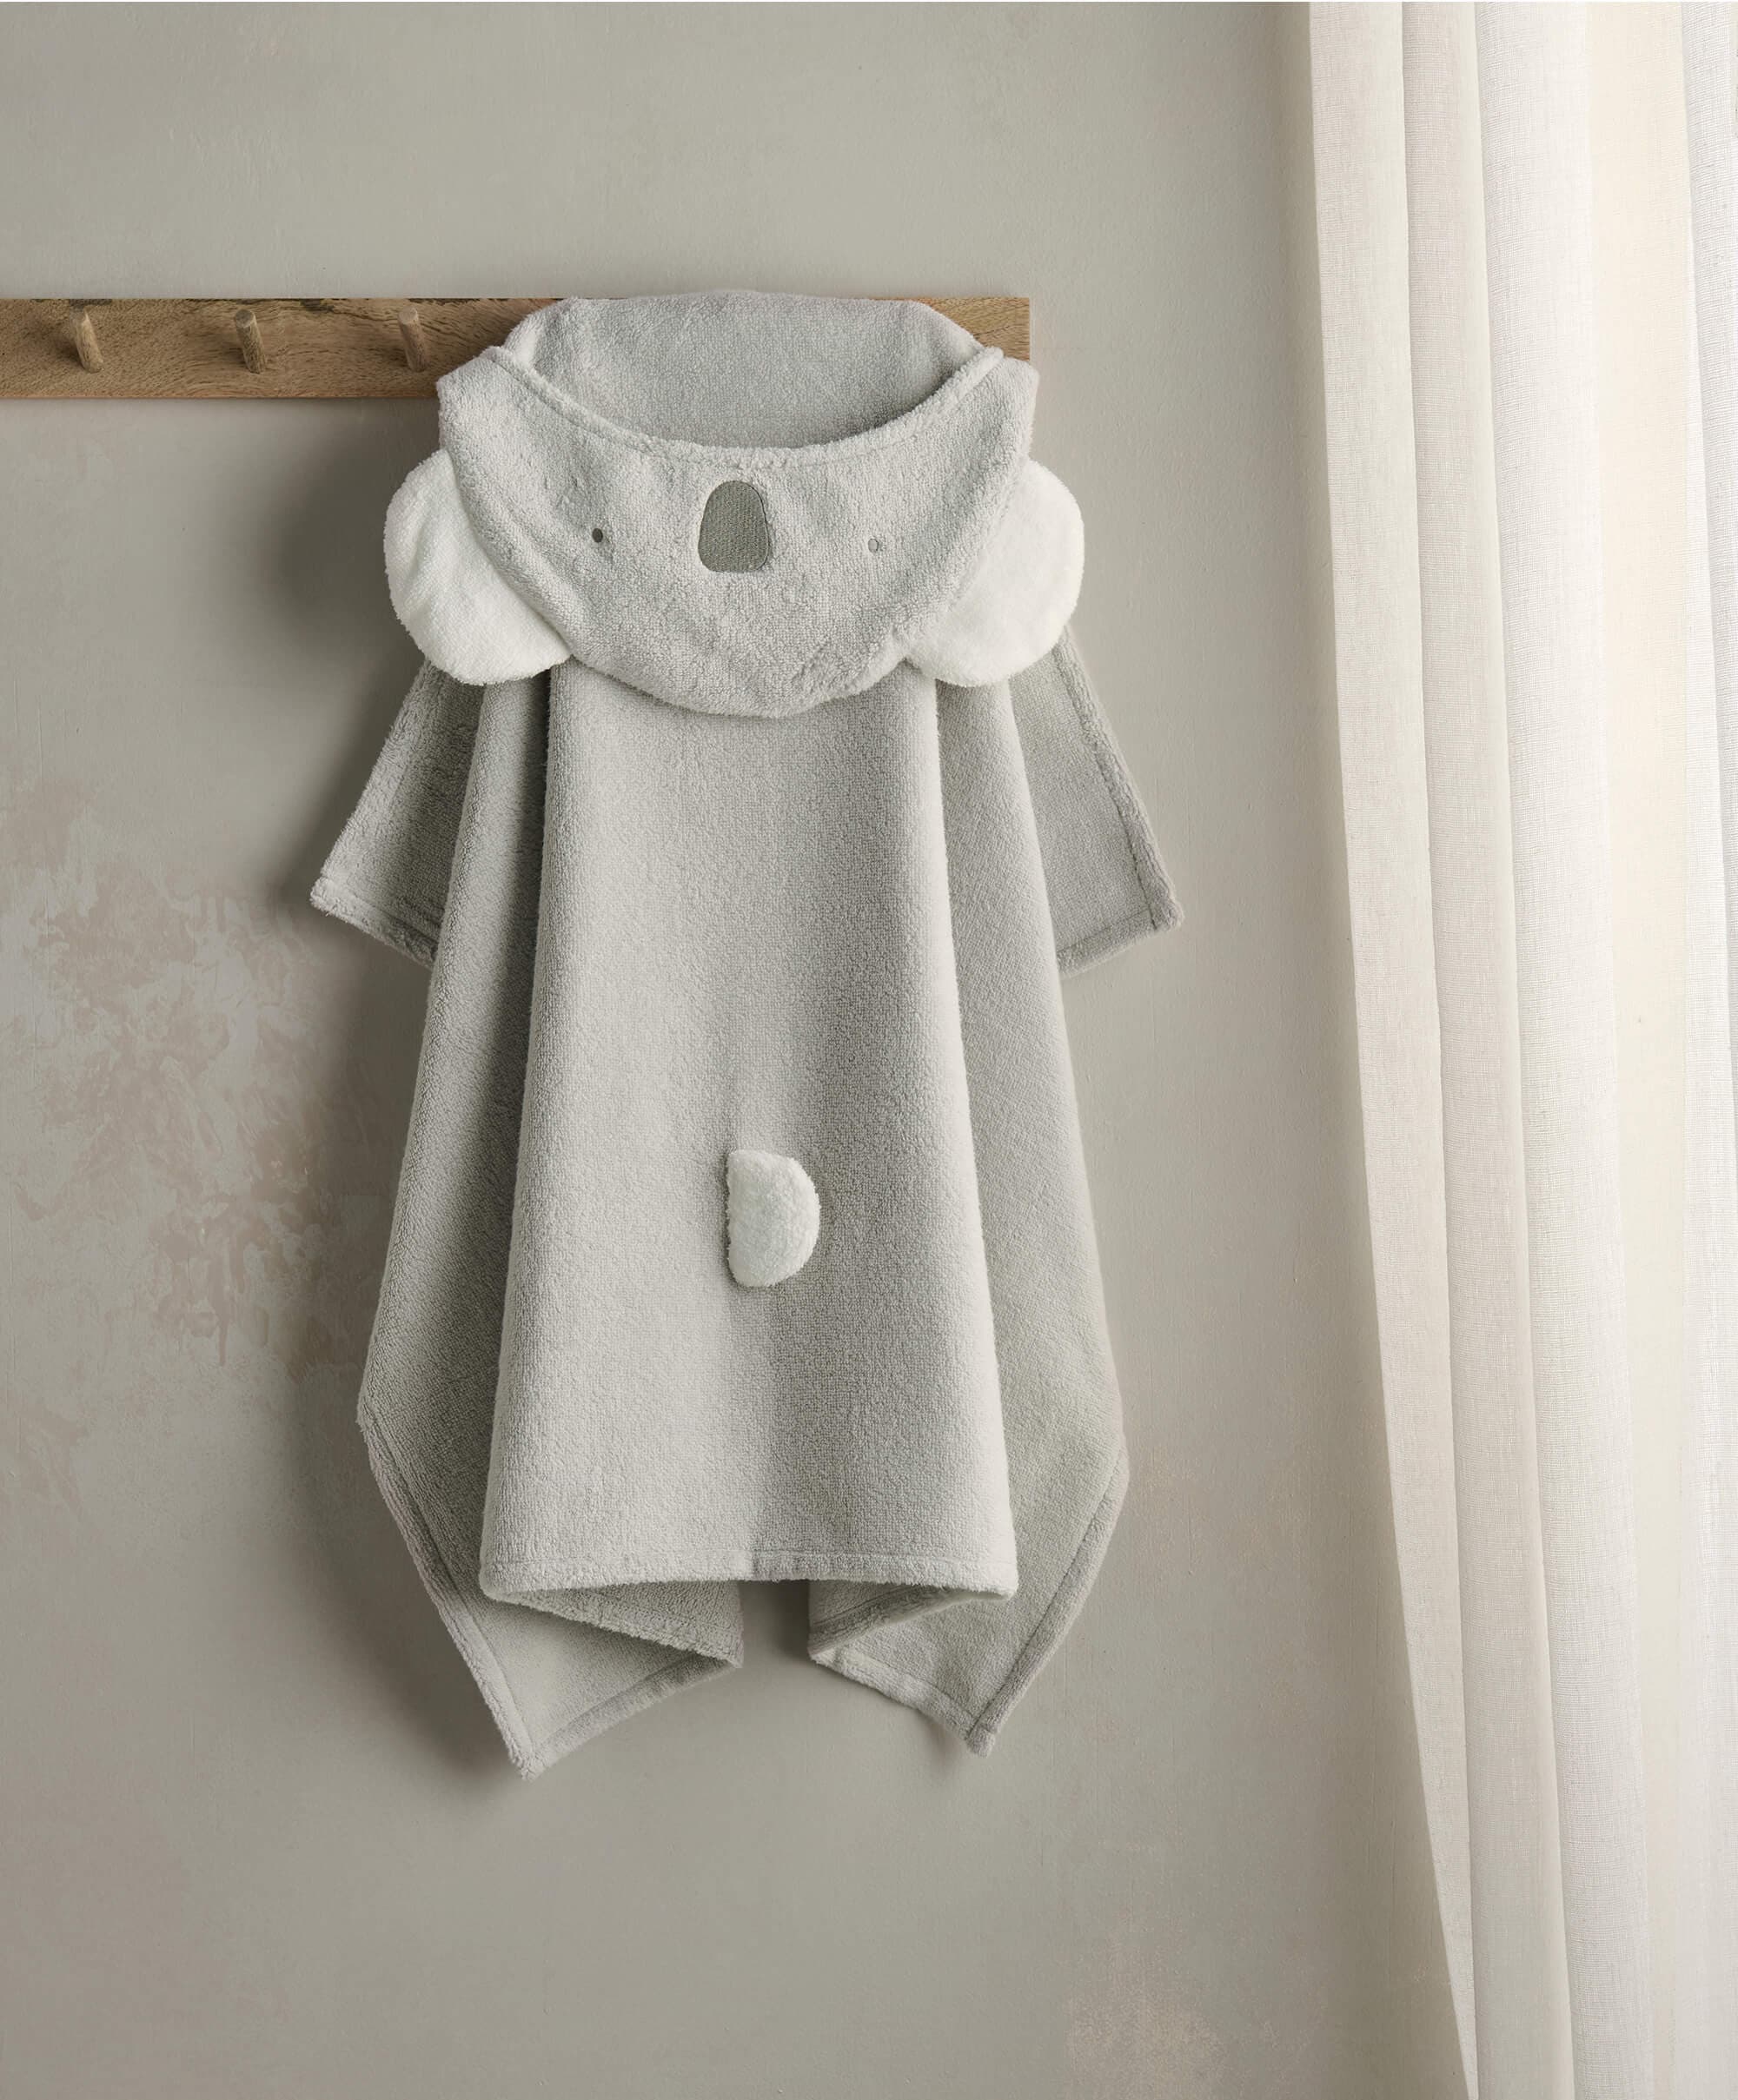 Hooded Baby Towel - Koala